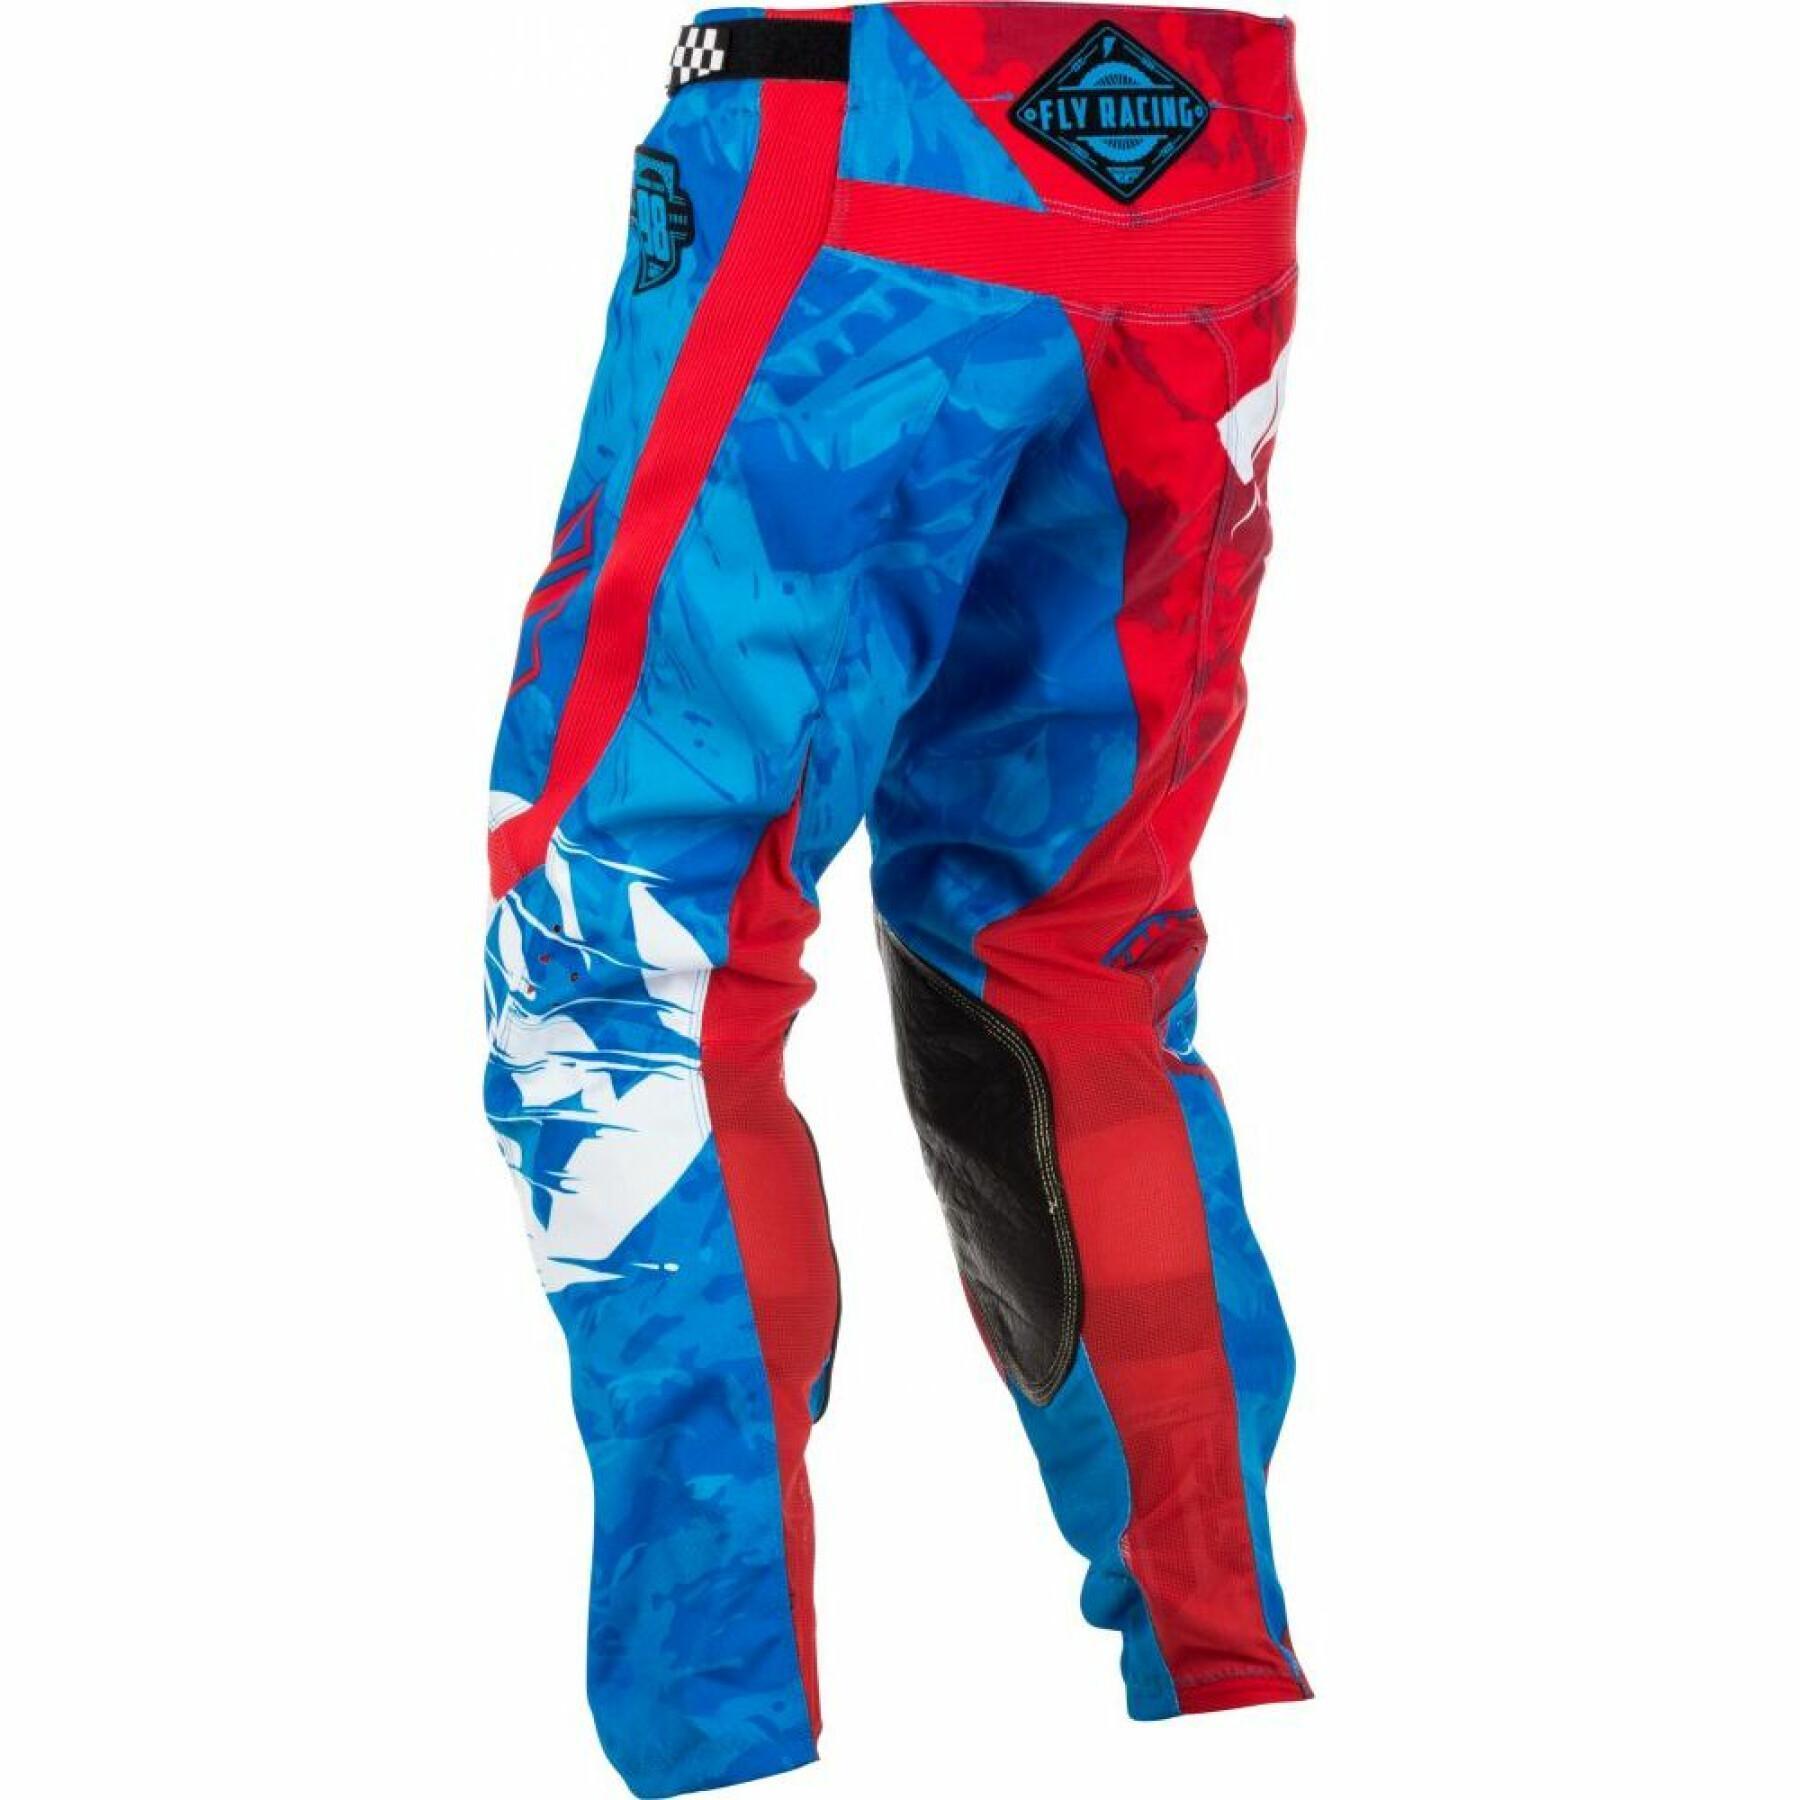 Pantalones para niños Fly Racing Kinetic Outlaw 2018